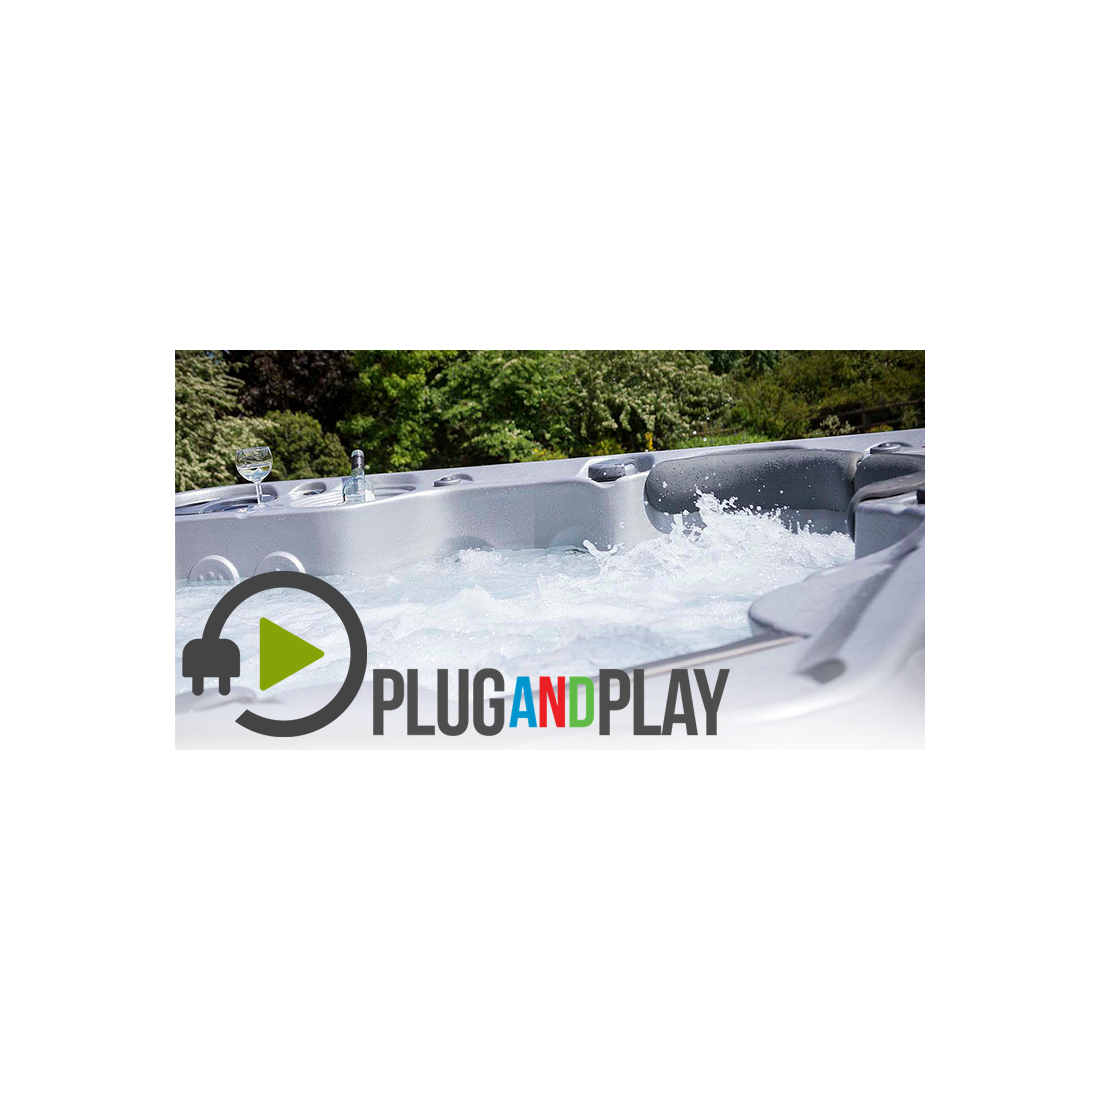 Plug & Play Hot Tubs: 2 More Join The Range